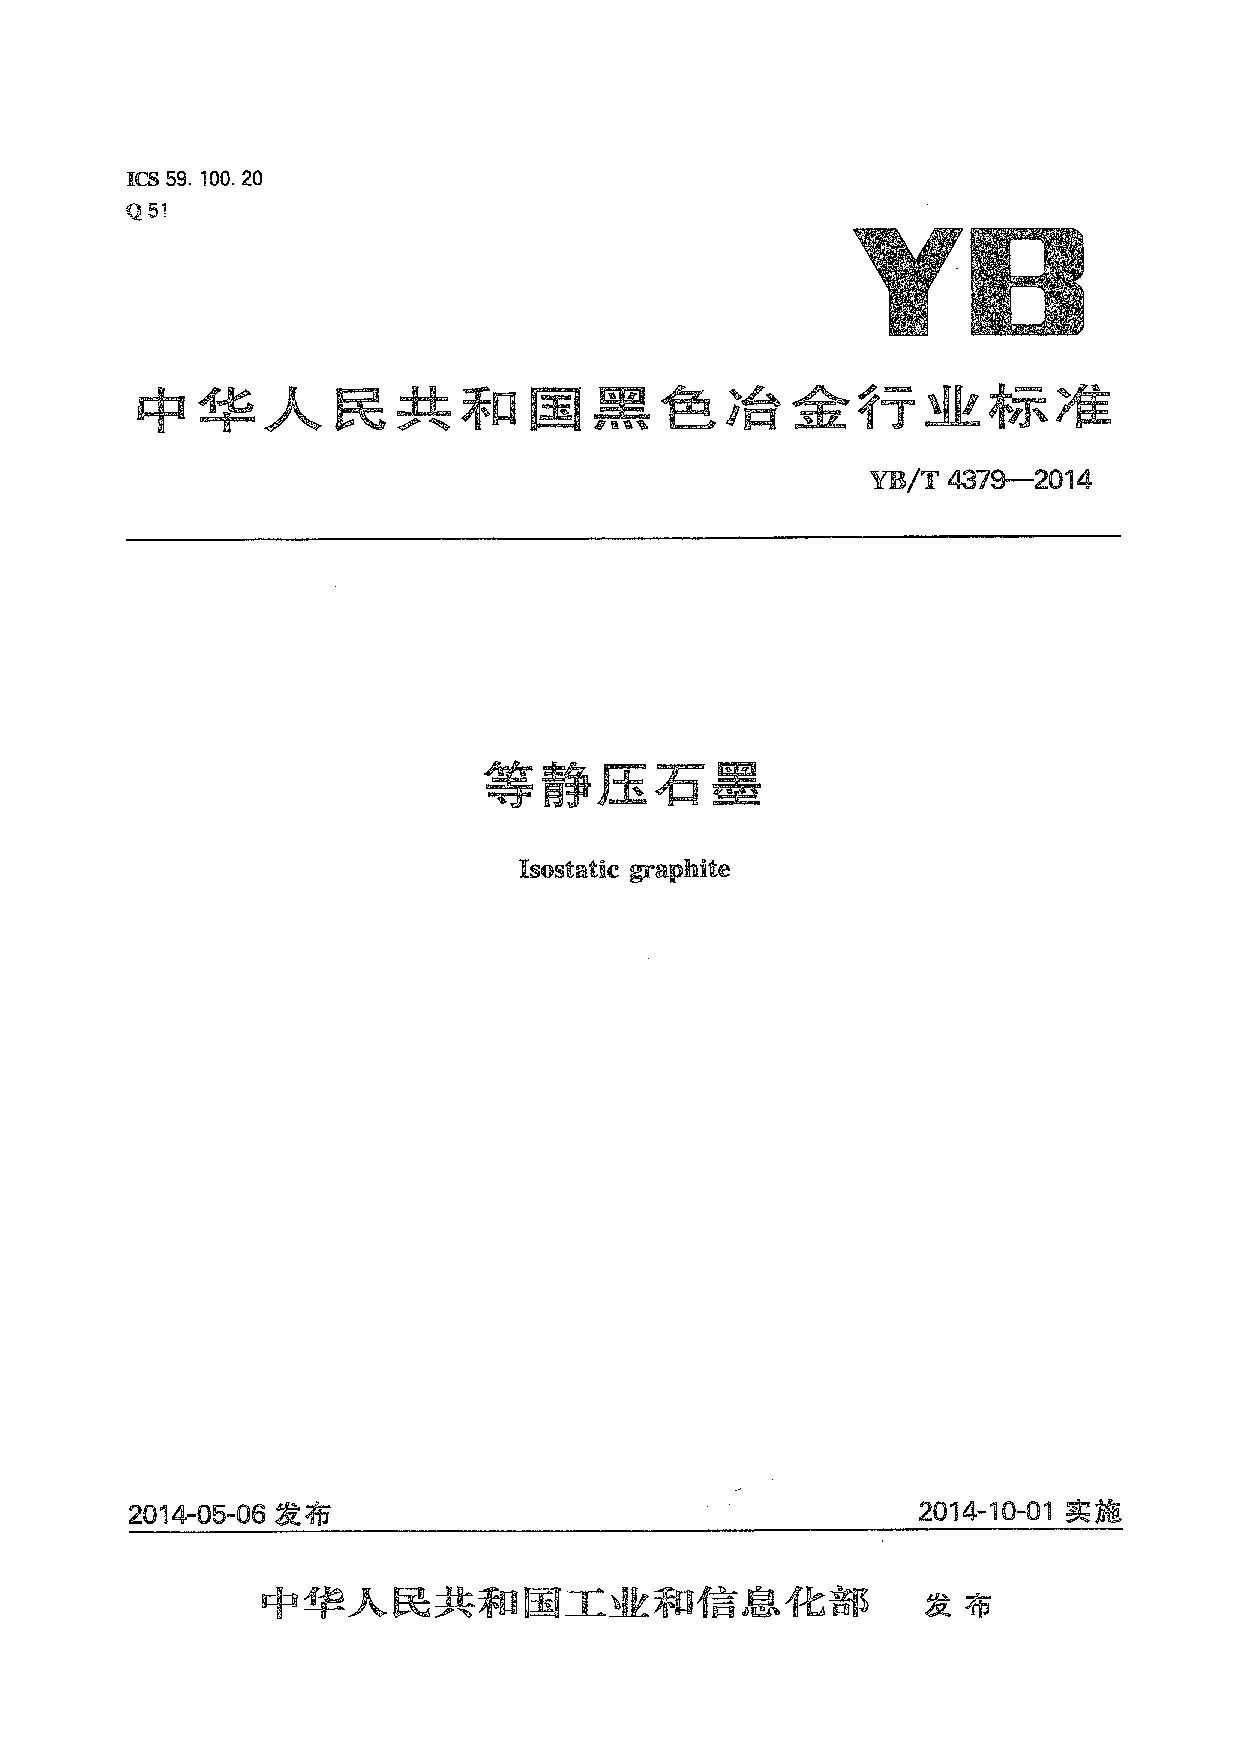 YB/T 4379-2014